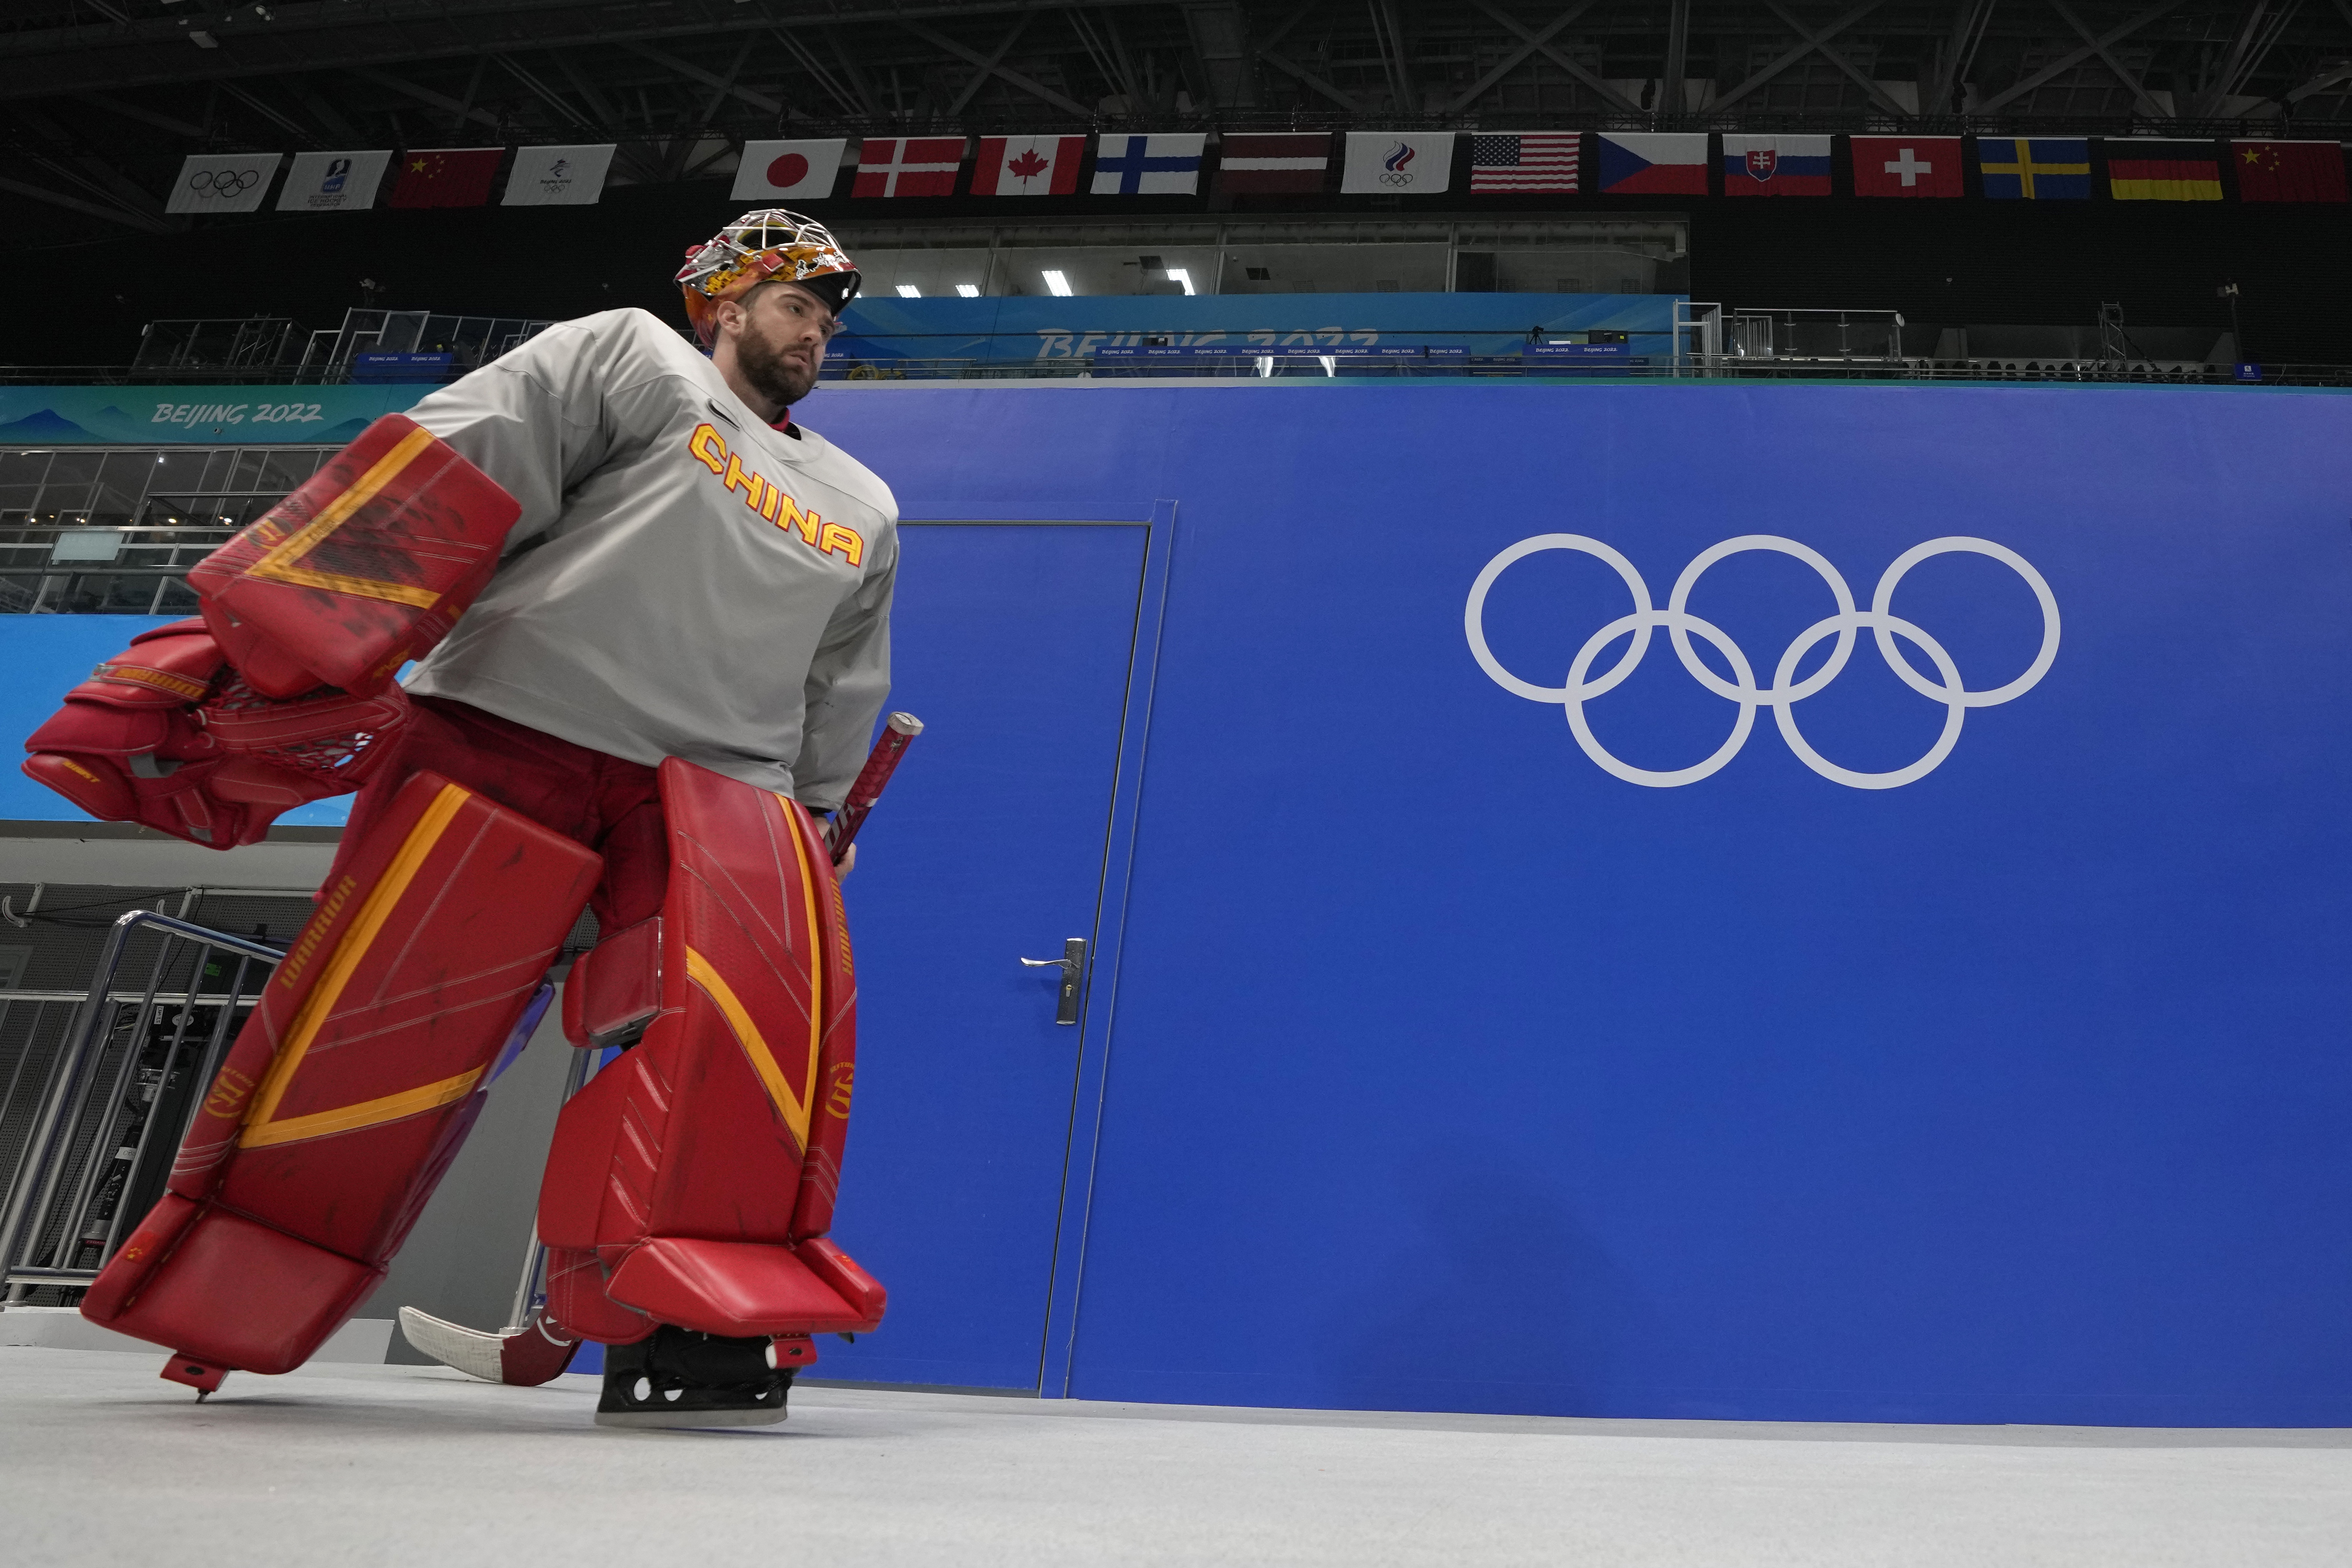 2022 Beijing Olympic Winter Games - Men's Hockey